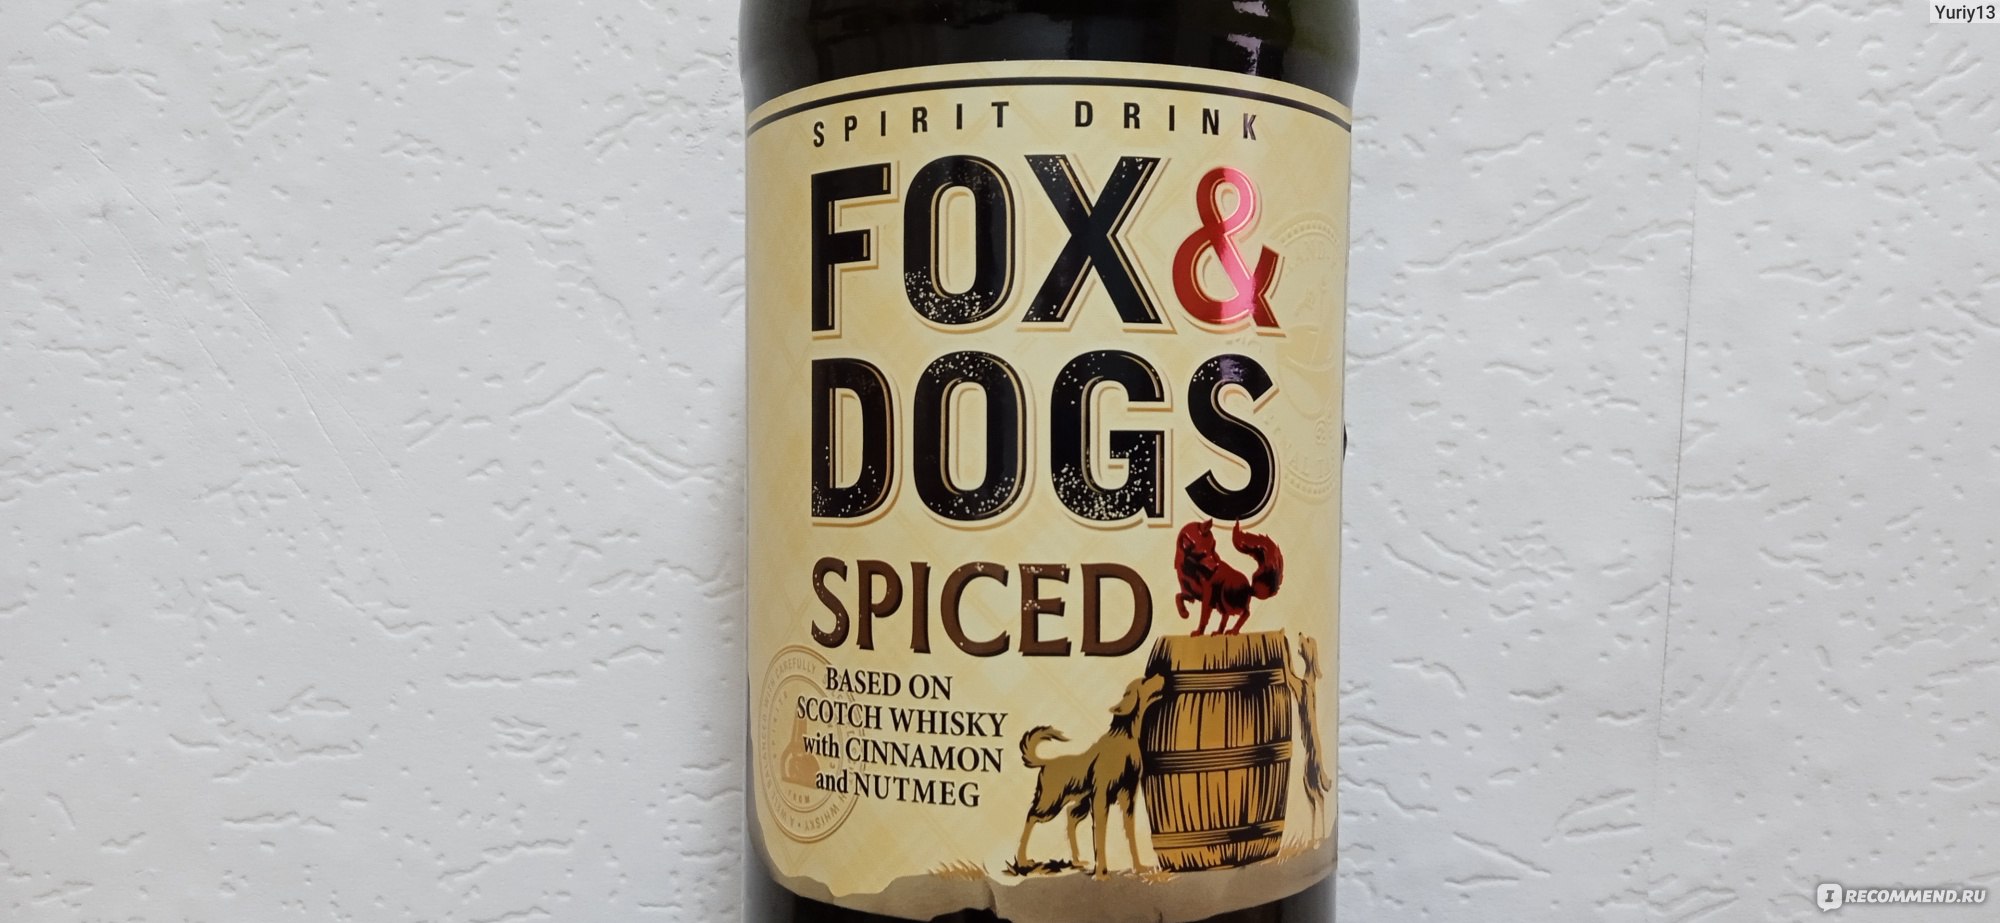 Fox and dogs отзывы. Виски Фокс энд догс 0.7. Виски Fox and Dogs Spiced. Виски Фокс энд догс 0.5. Настойка Фокс энд догс 0.7.